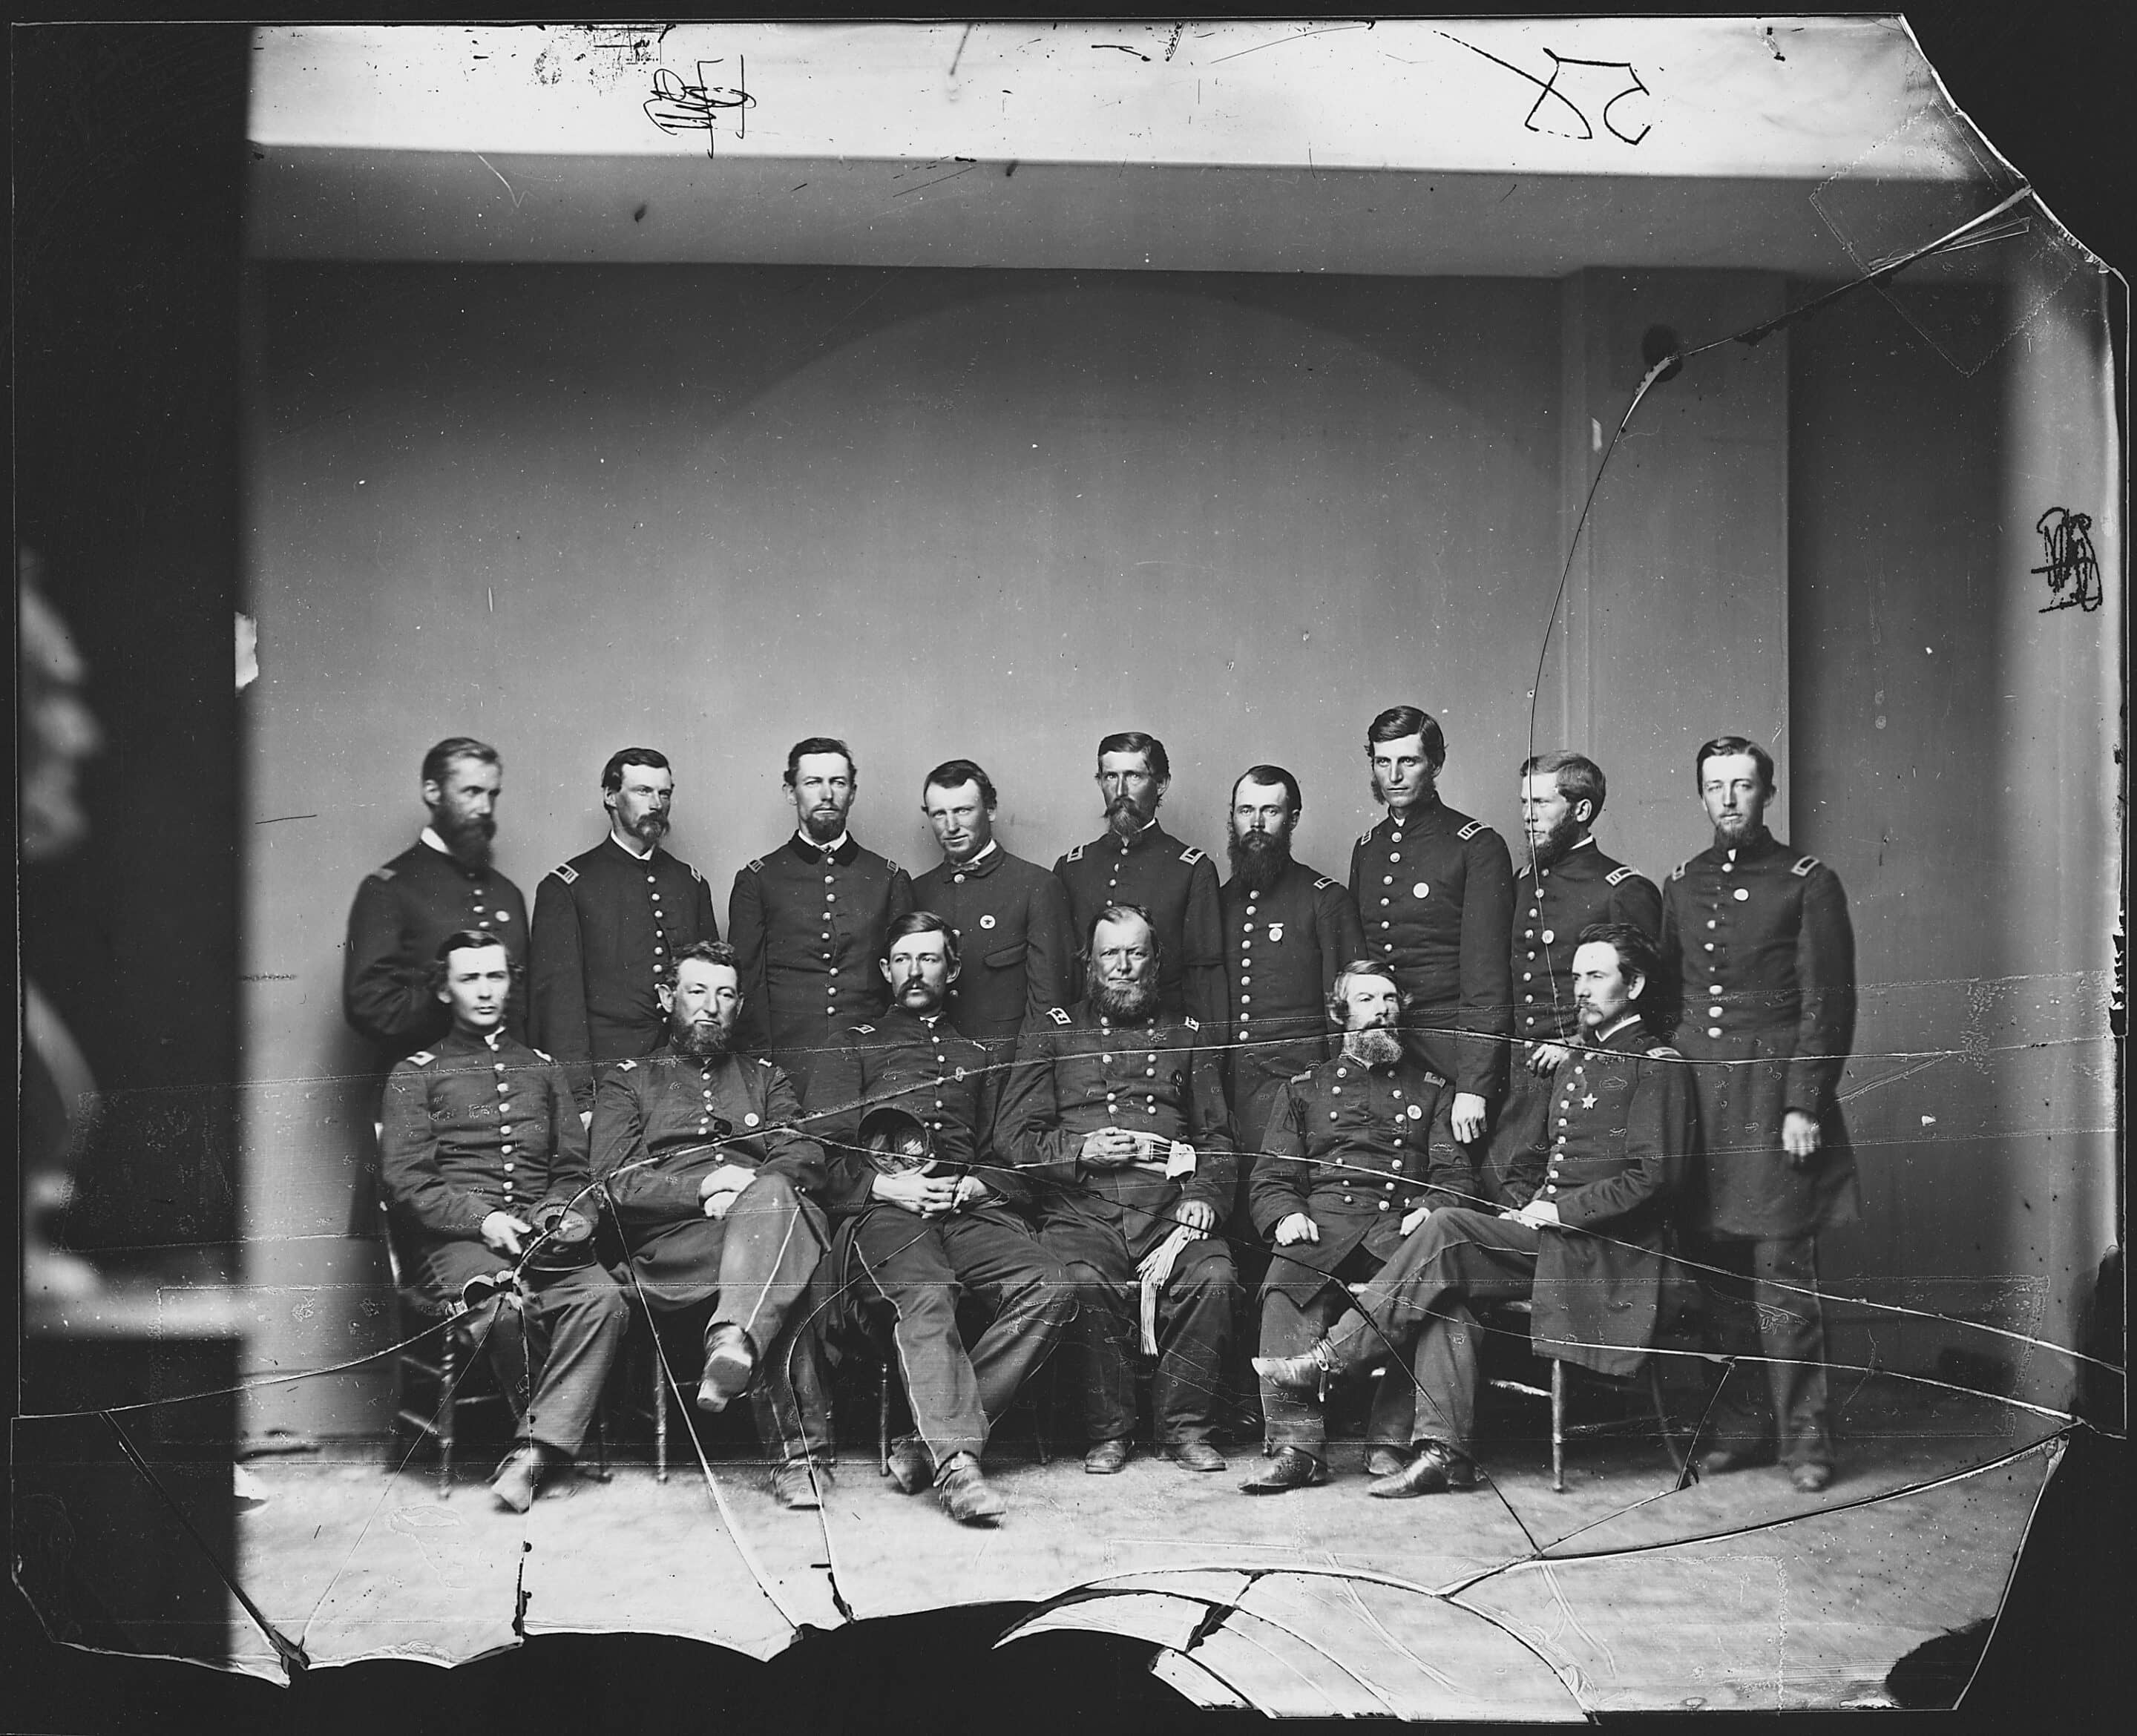 The Brady Civil War Photos, Fold3, and the Indiana Room